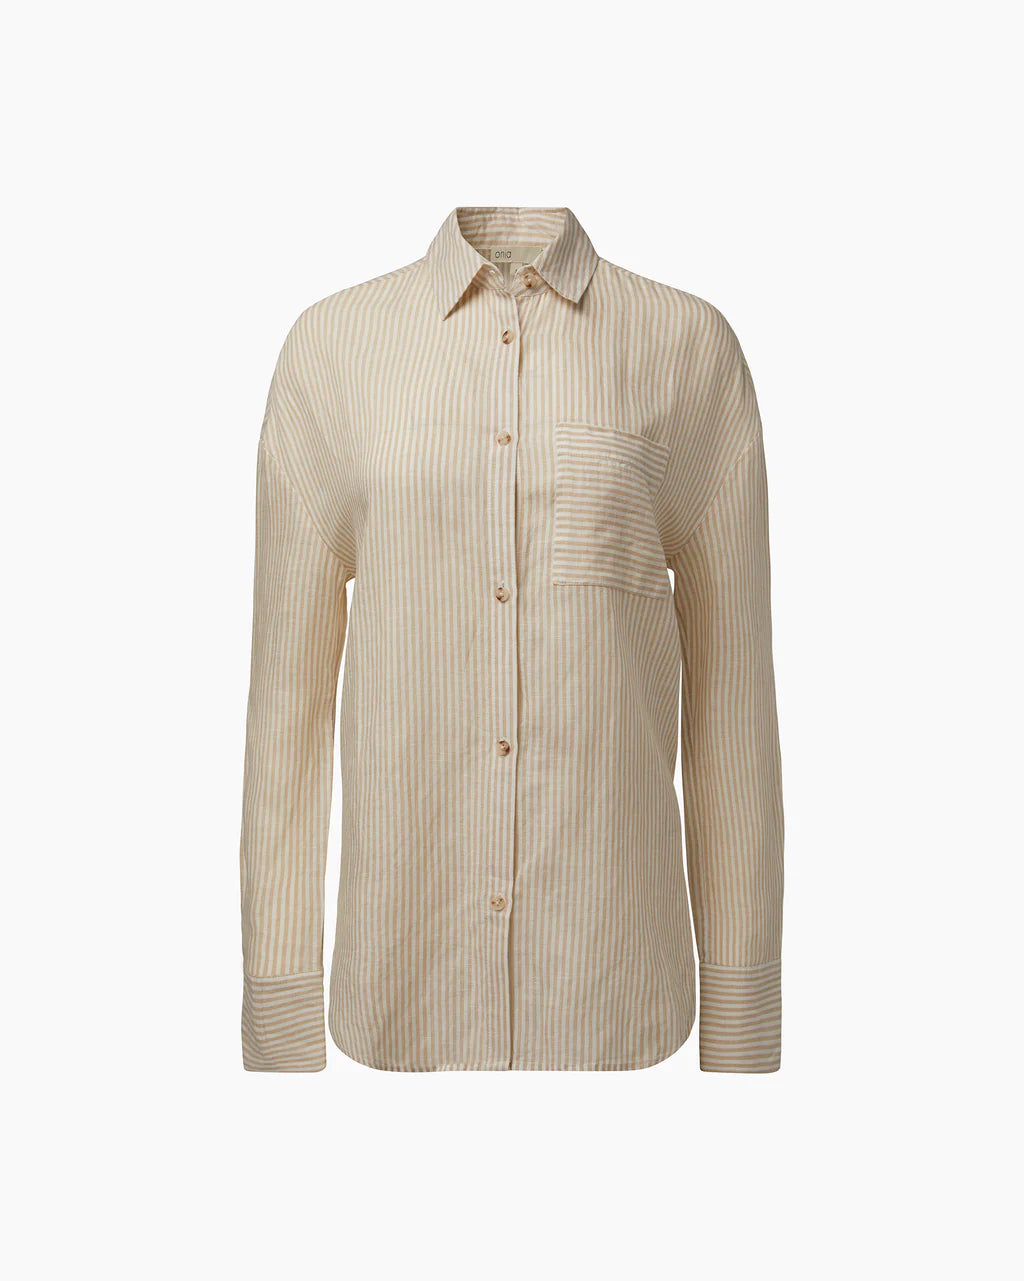 Air Linen Boyfriend Shirt- Jute/White